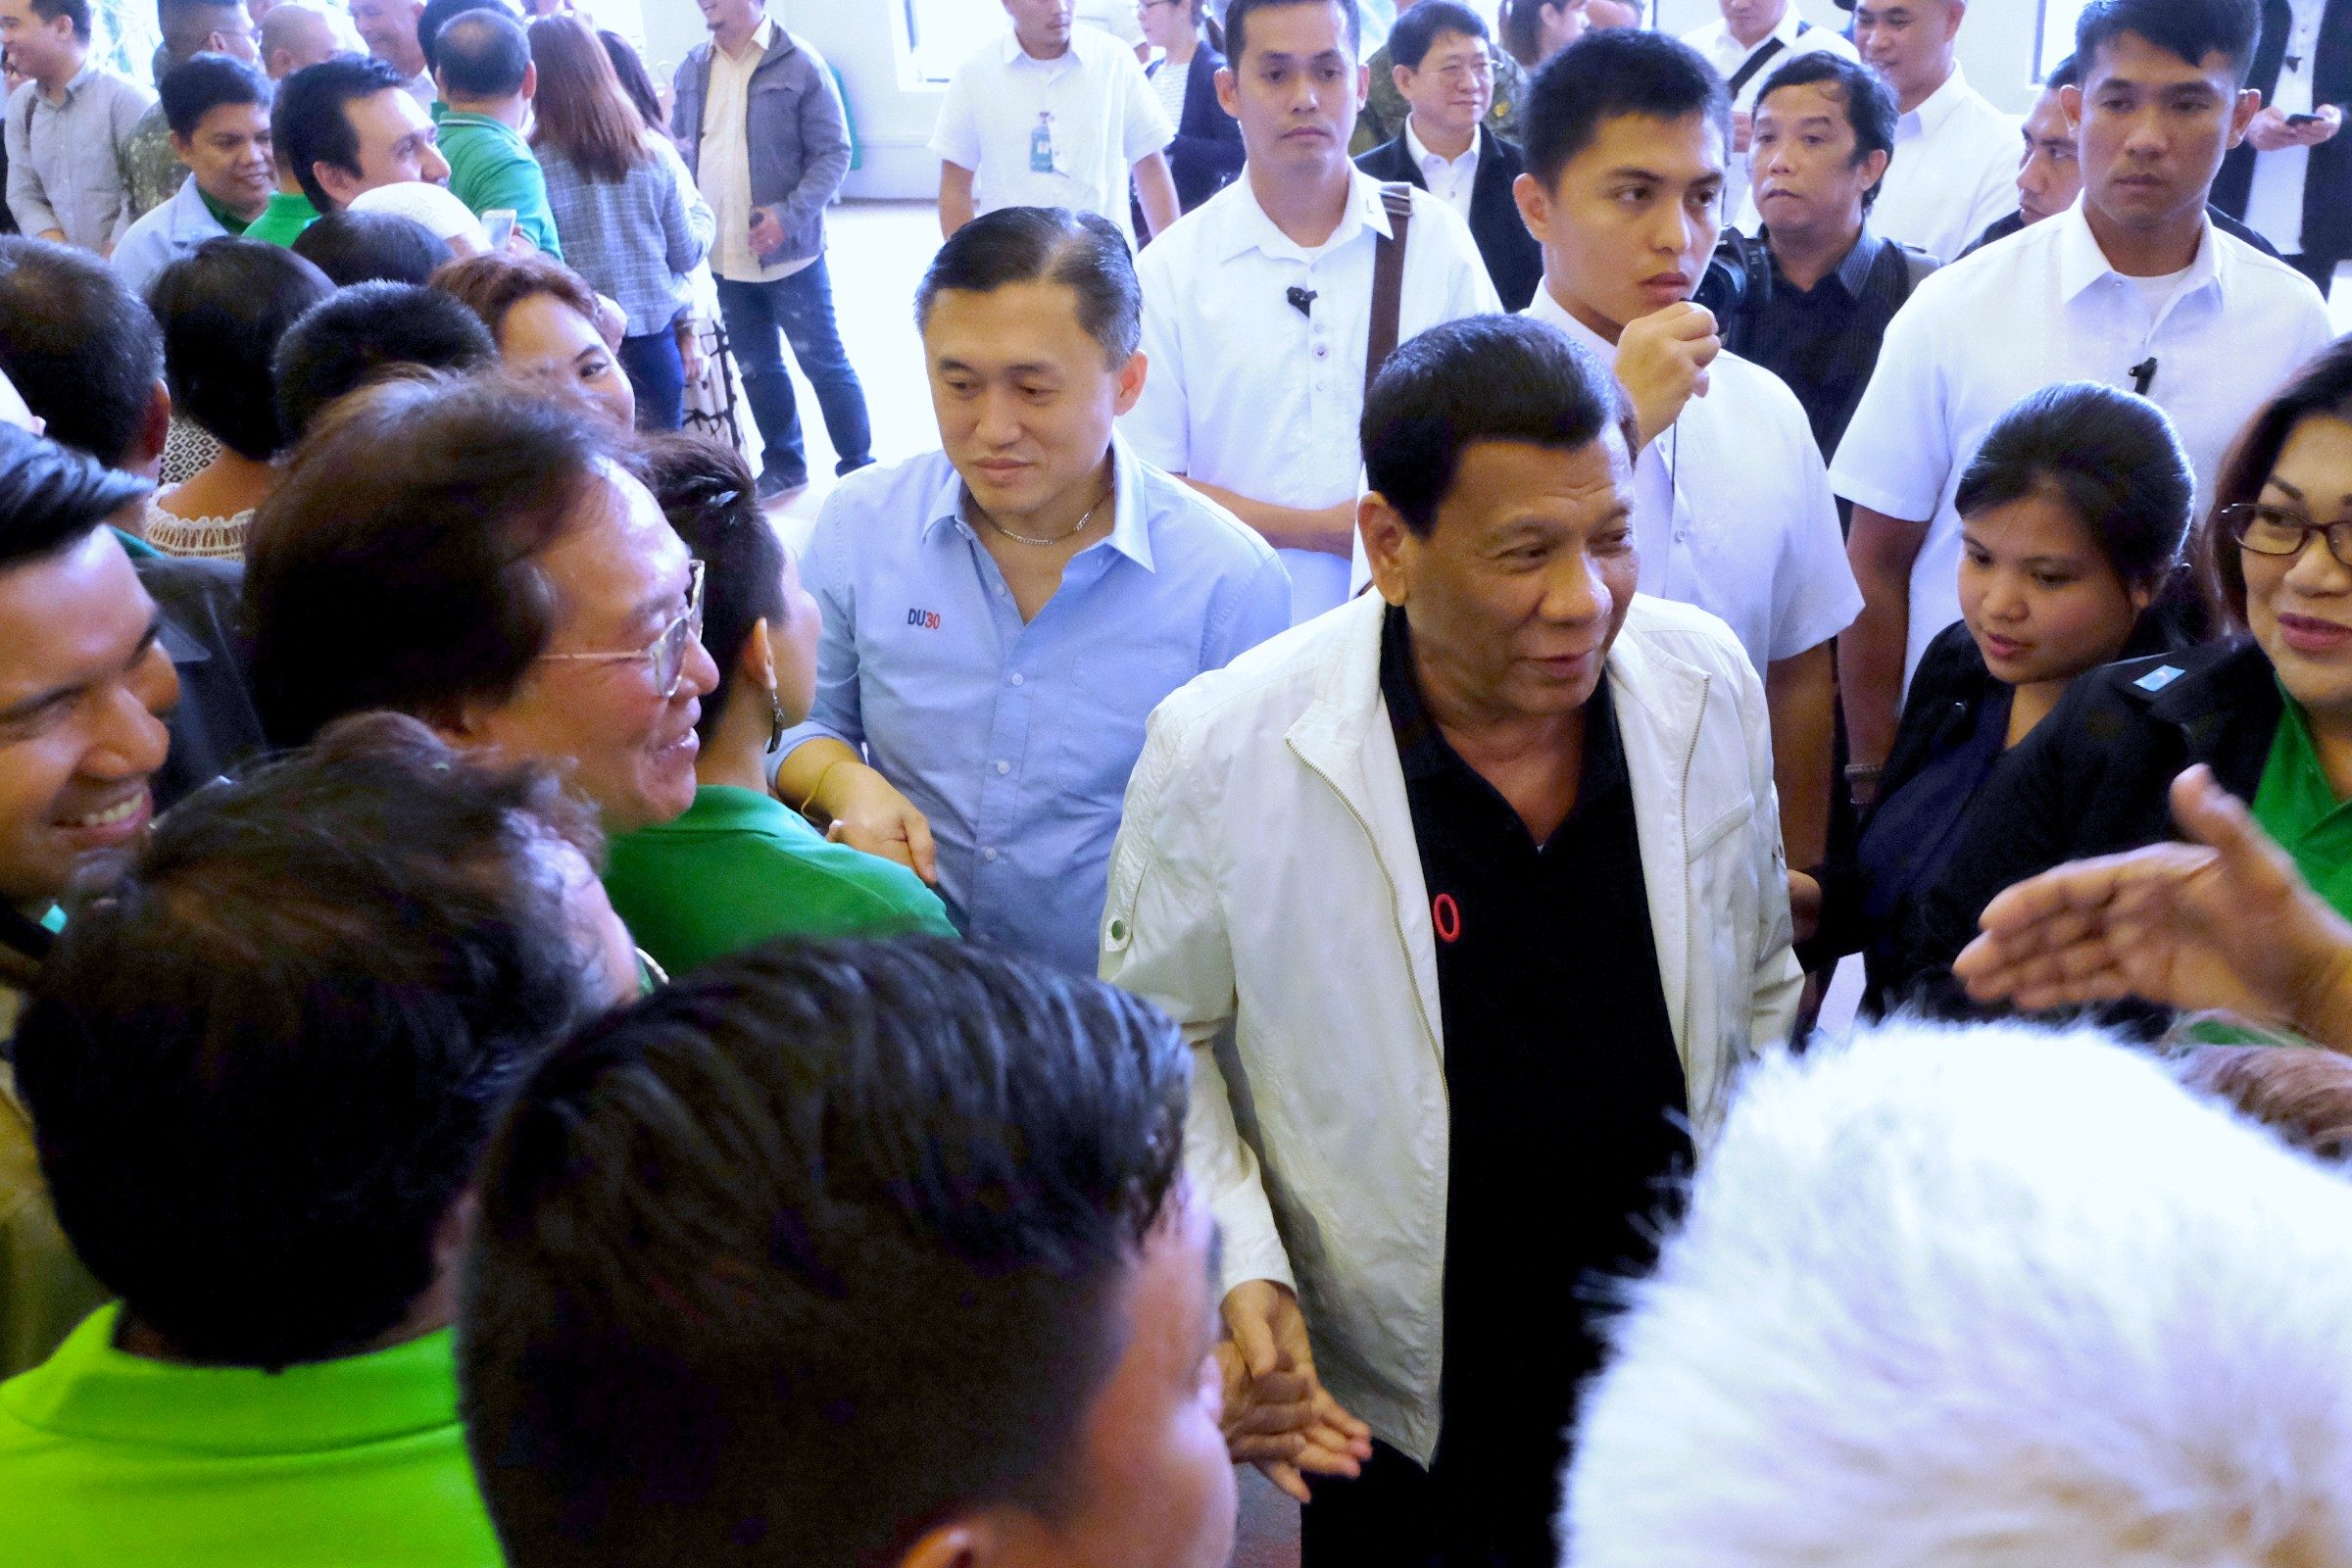 Duterte supports same-sex civil union, says Malacañang